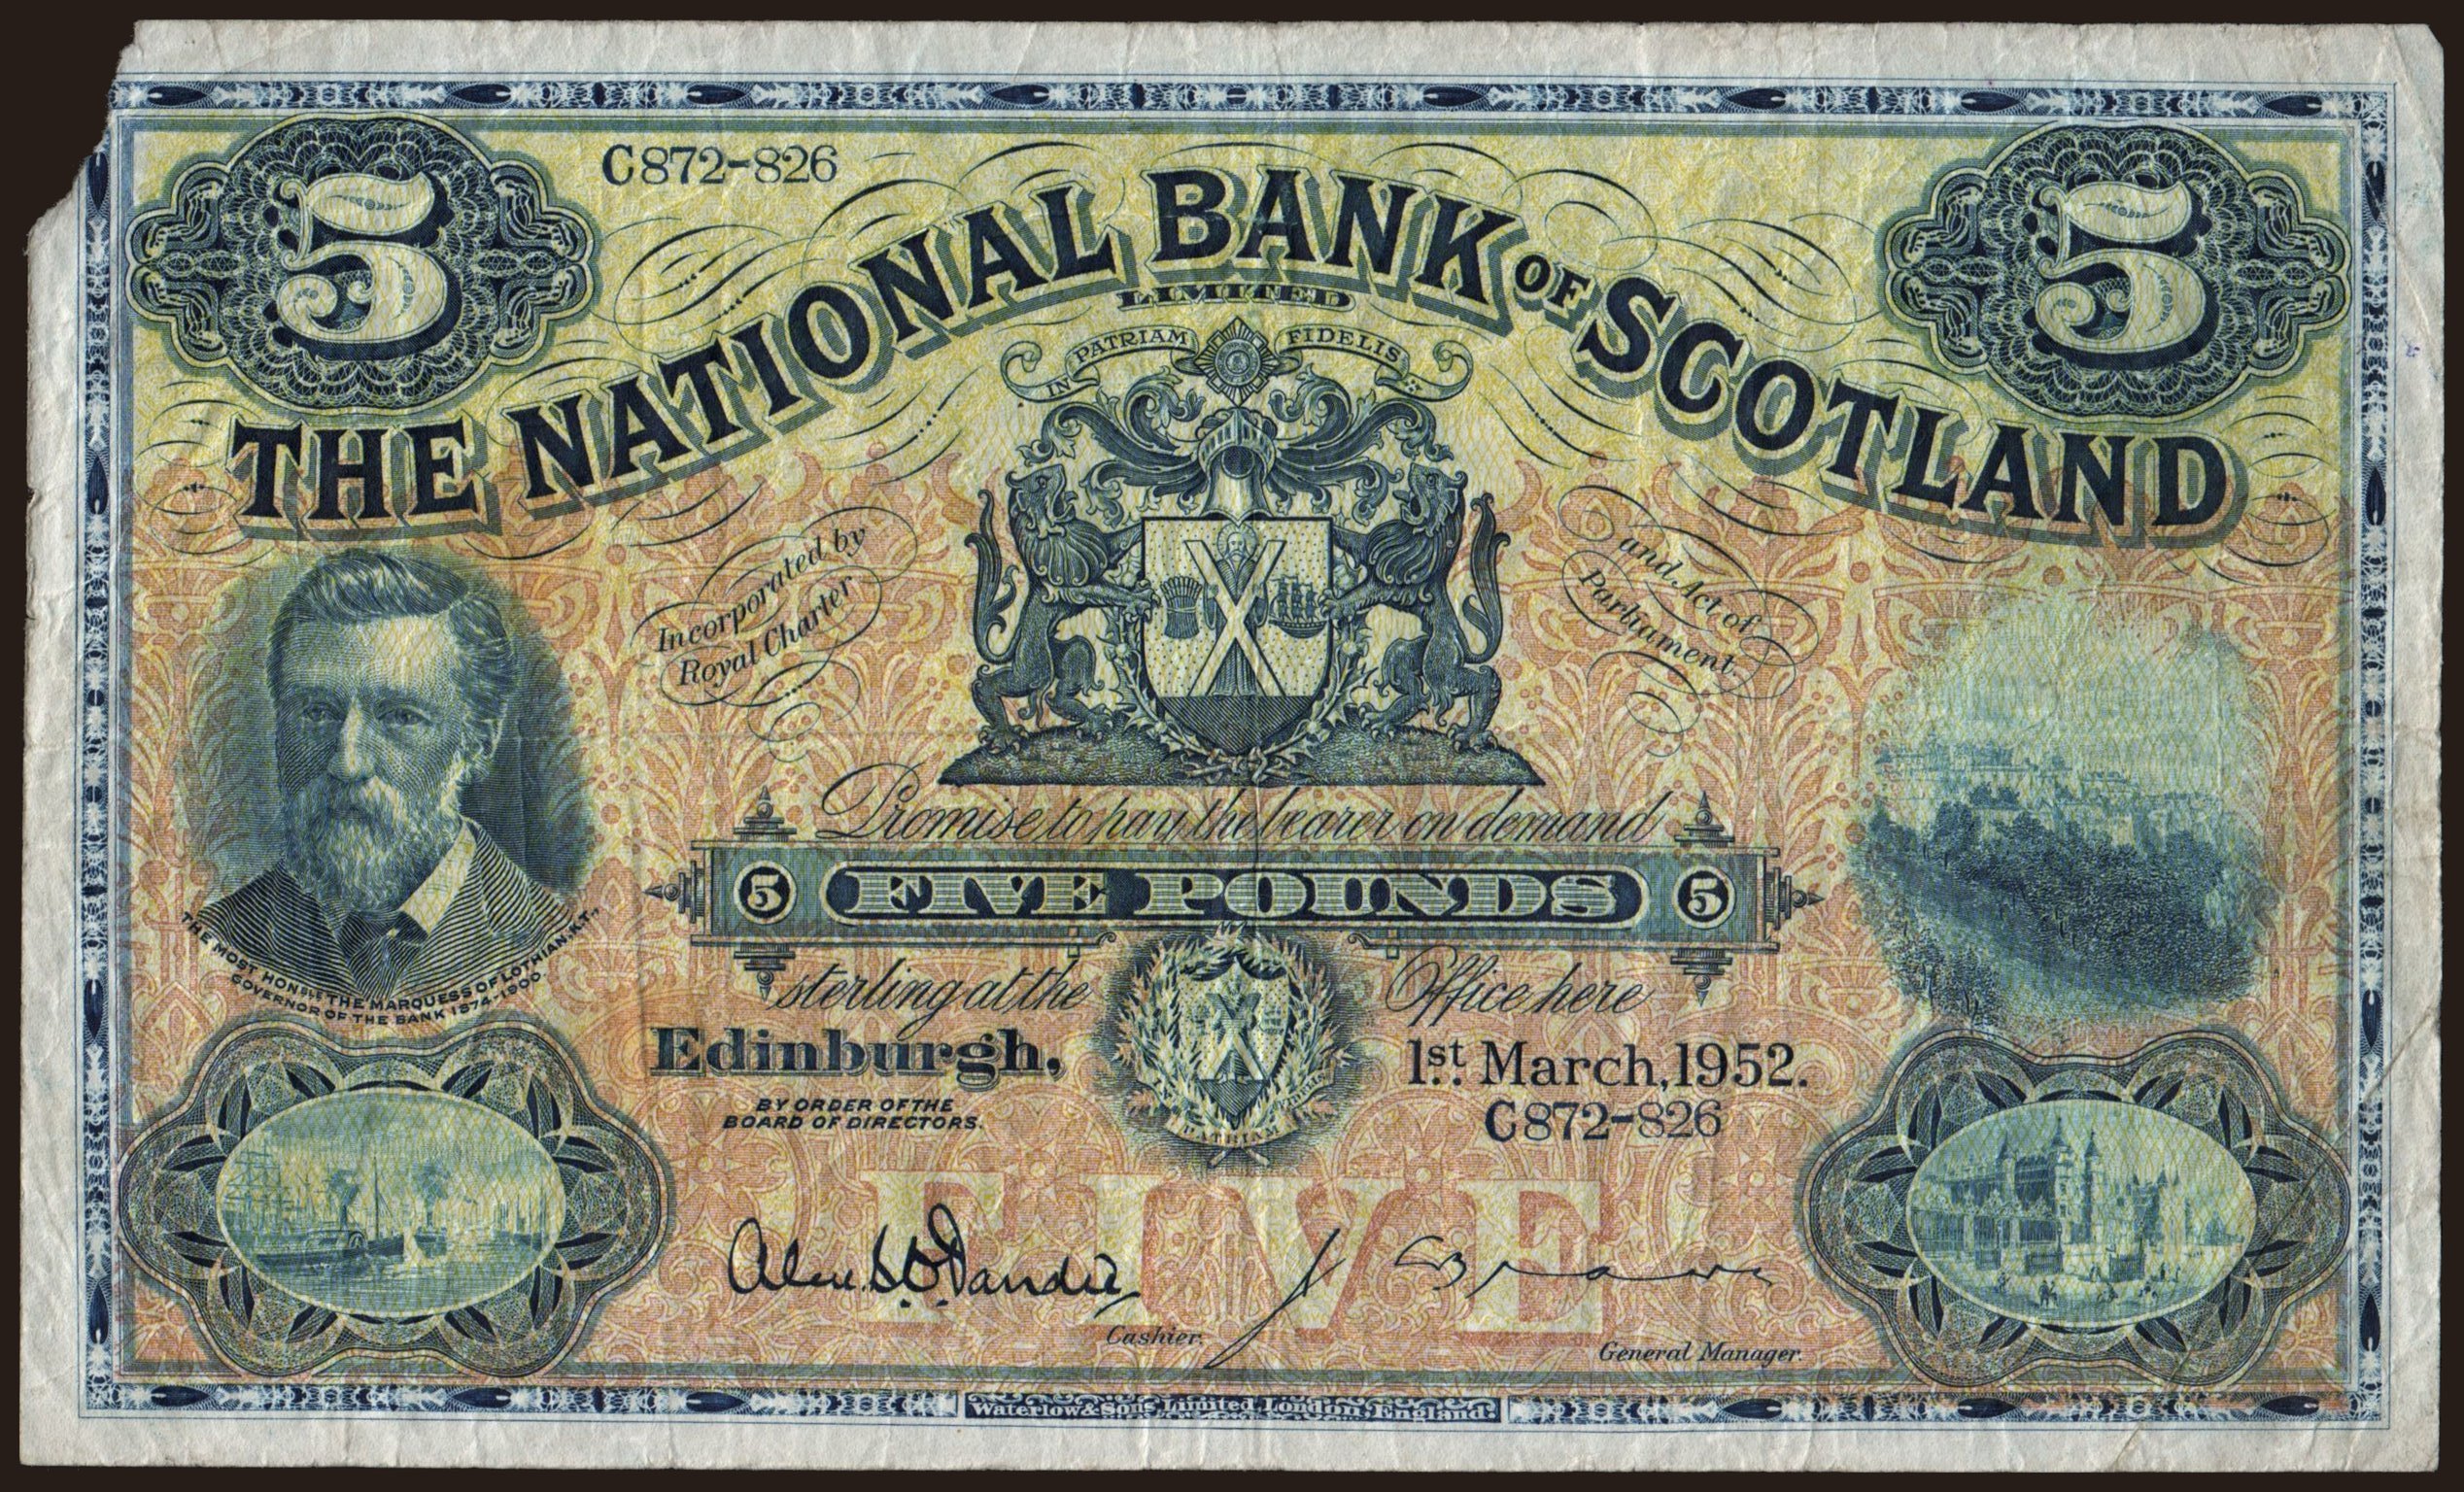 National Bank of Scotland, 5 pounds, 1952